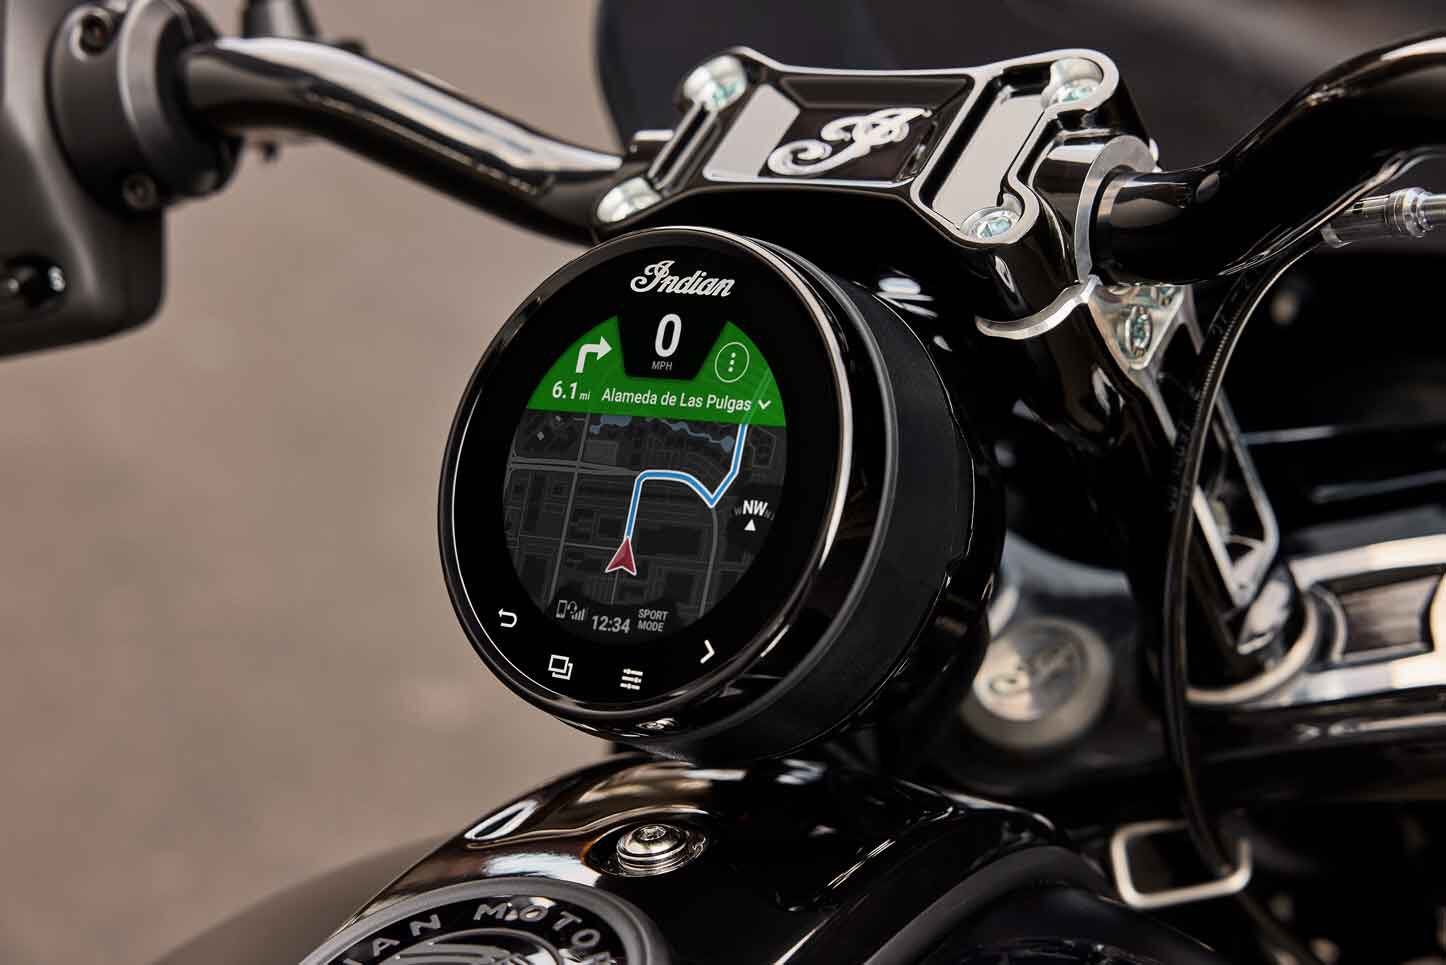 Each Sport Chief will feature a 4-inch touchscreen instrument gauge.